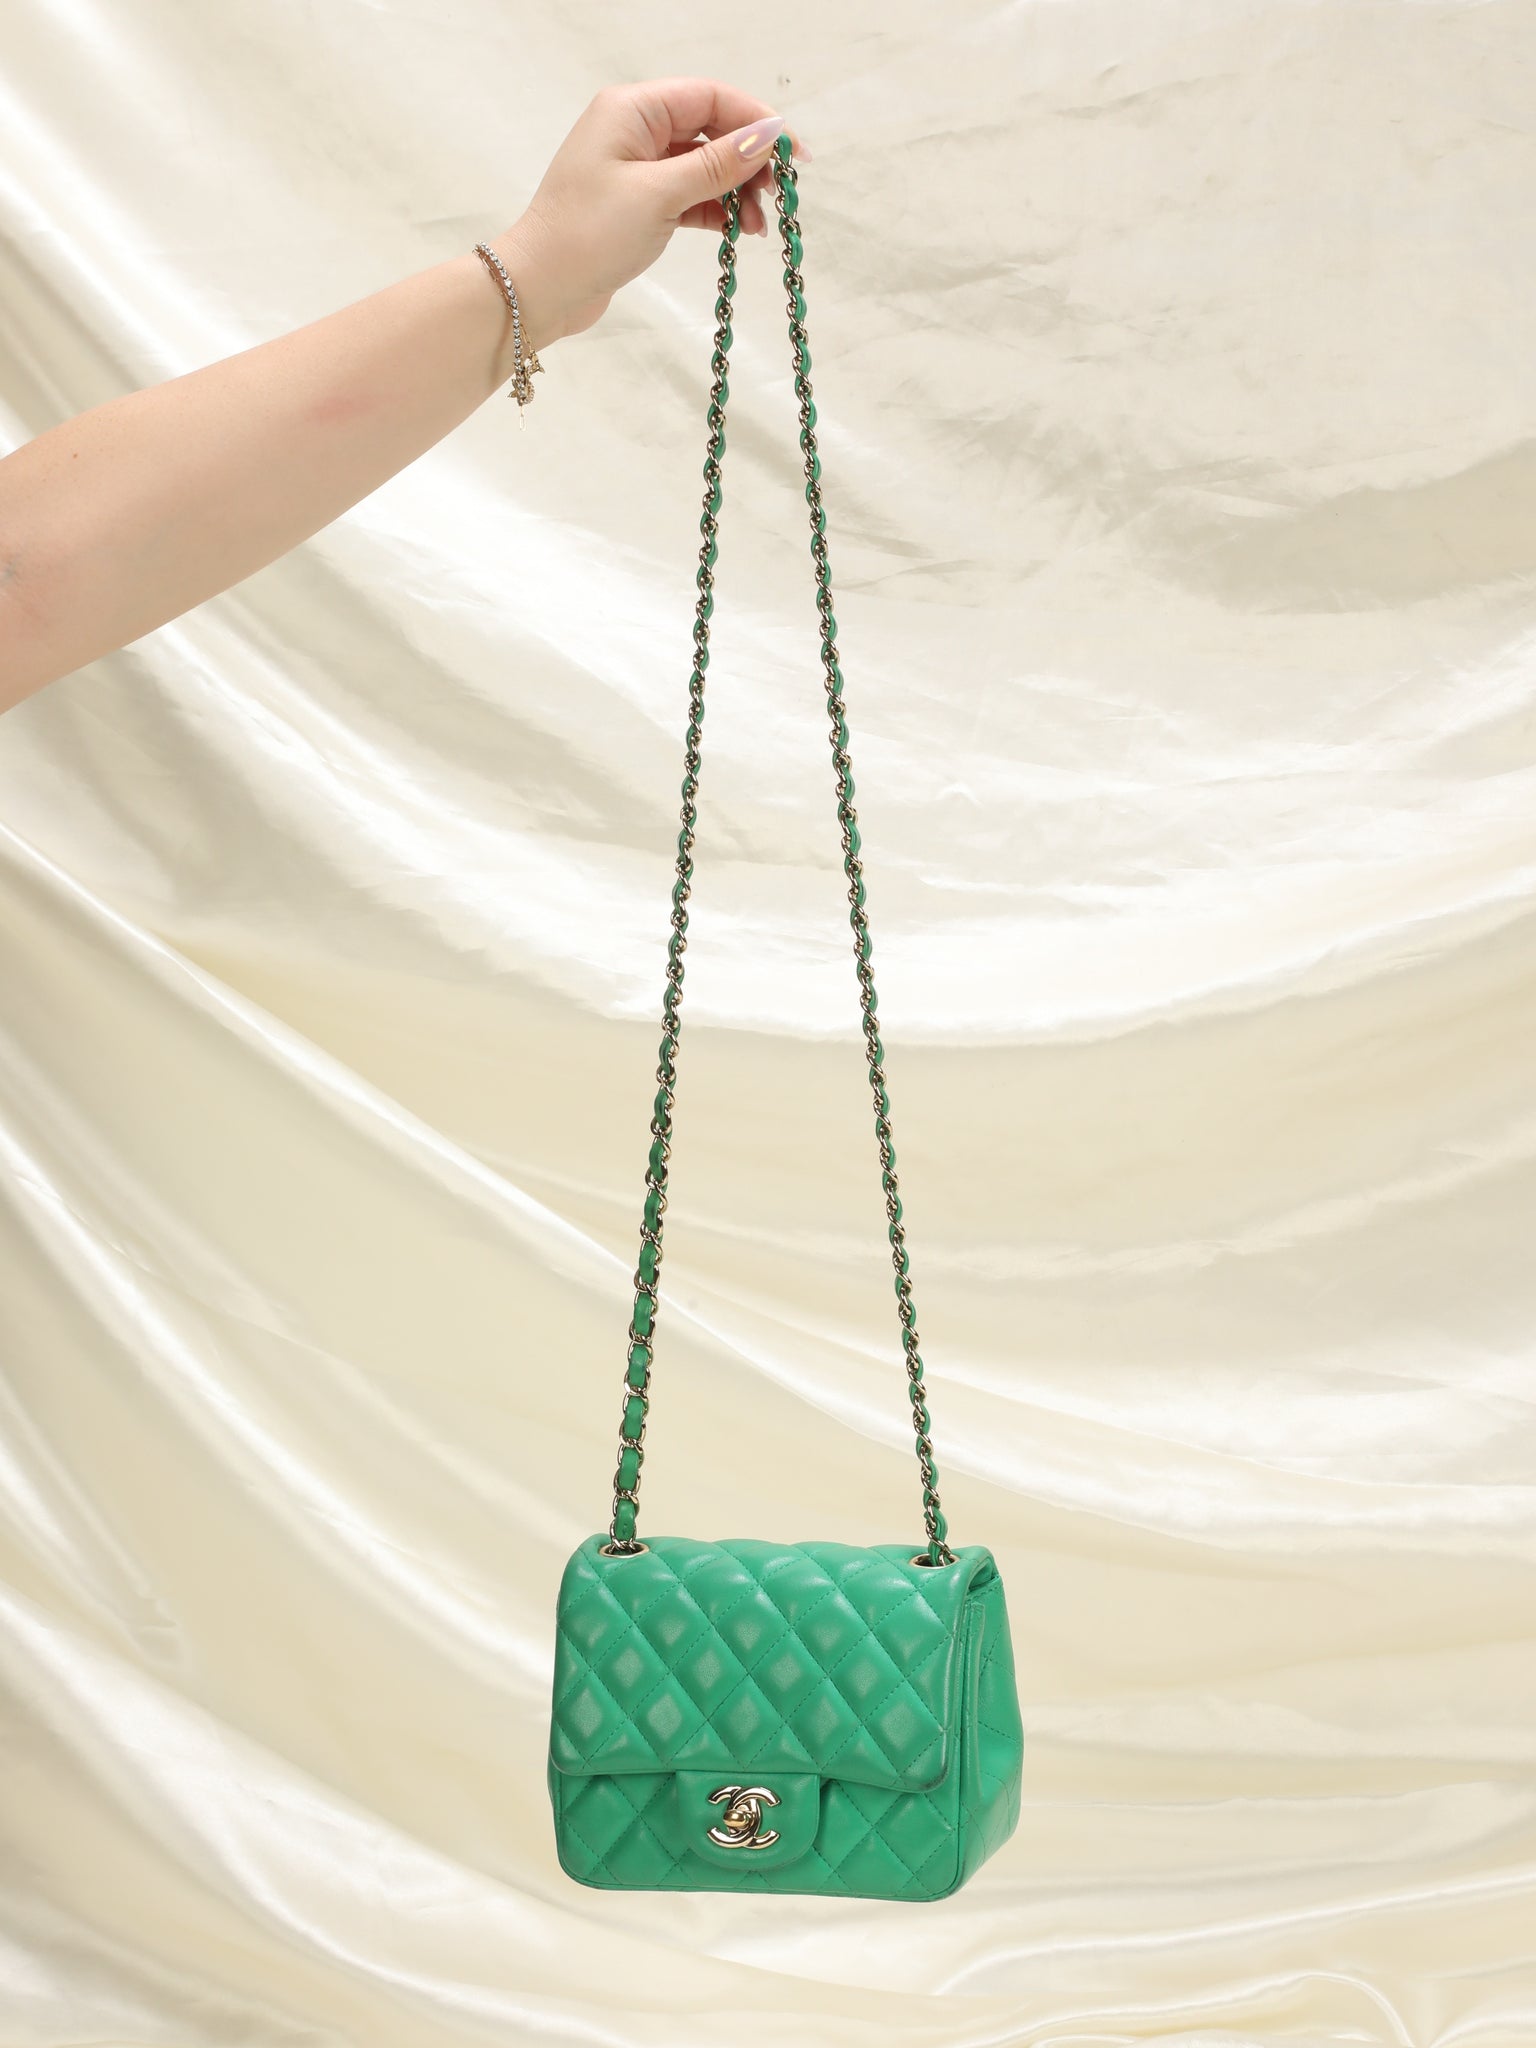 mini chanel green bag